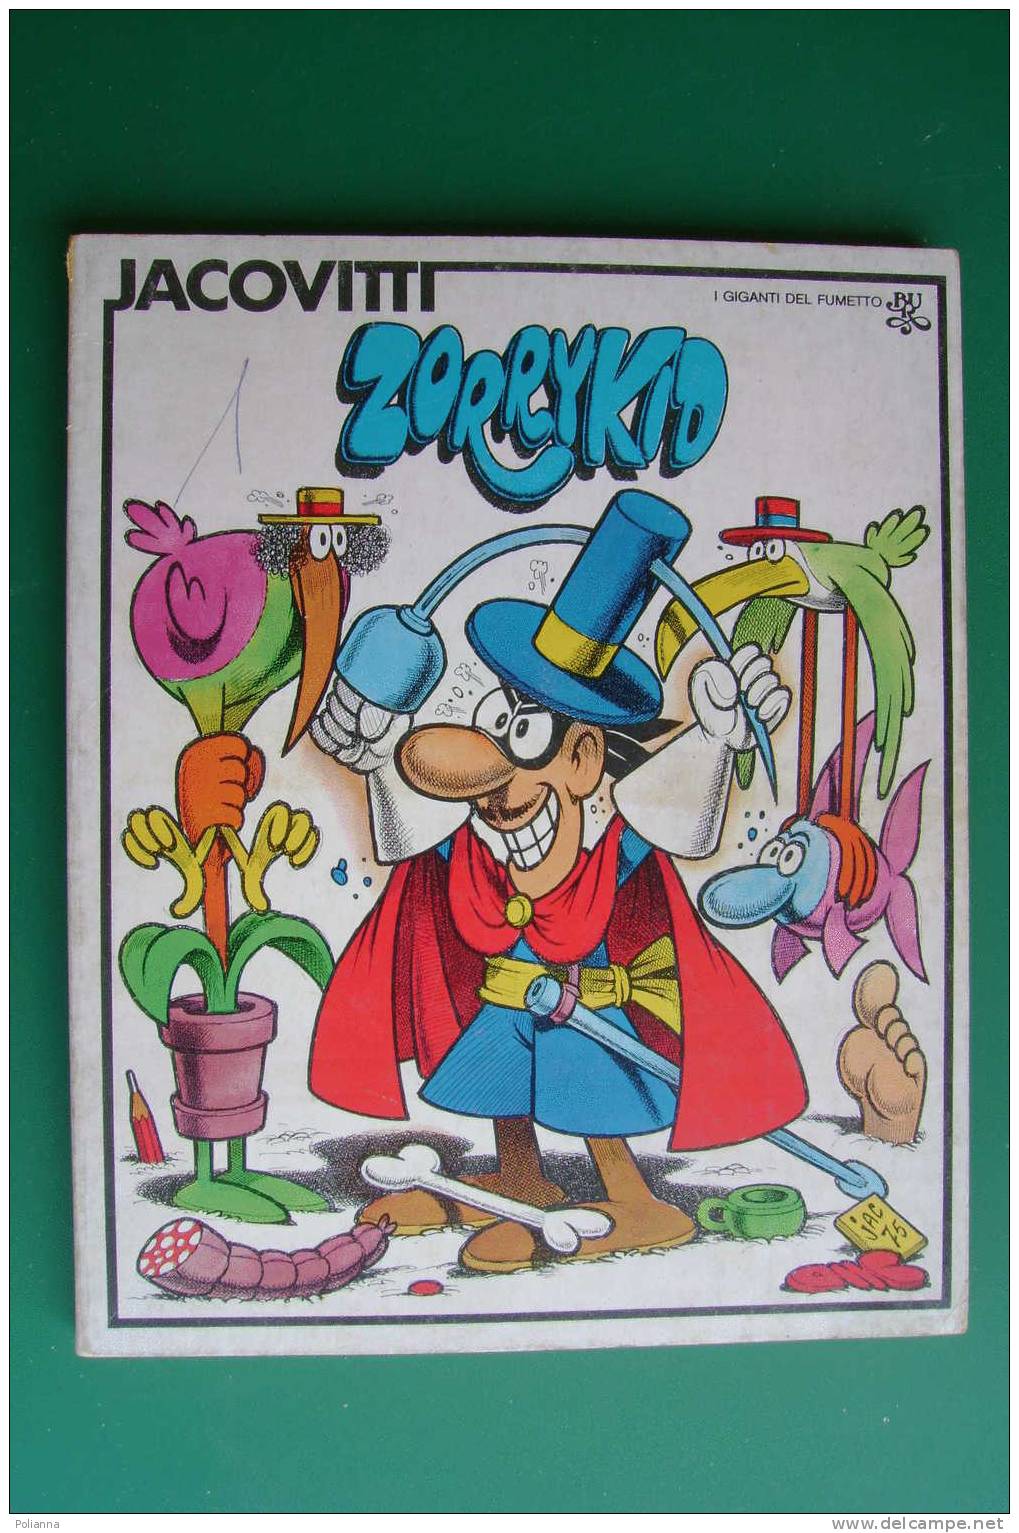 PDU/49 I Giganti Del Fumetto : Jacovitti ZORRYKID I Ed. BUR 1975 - Humoristiques